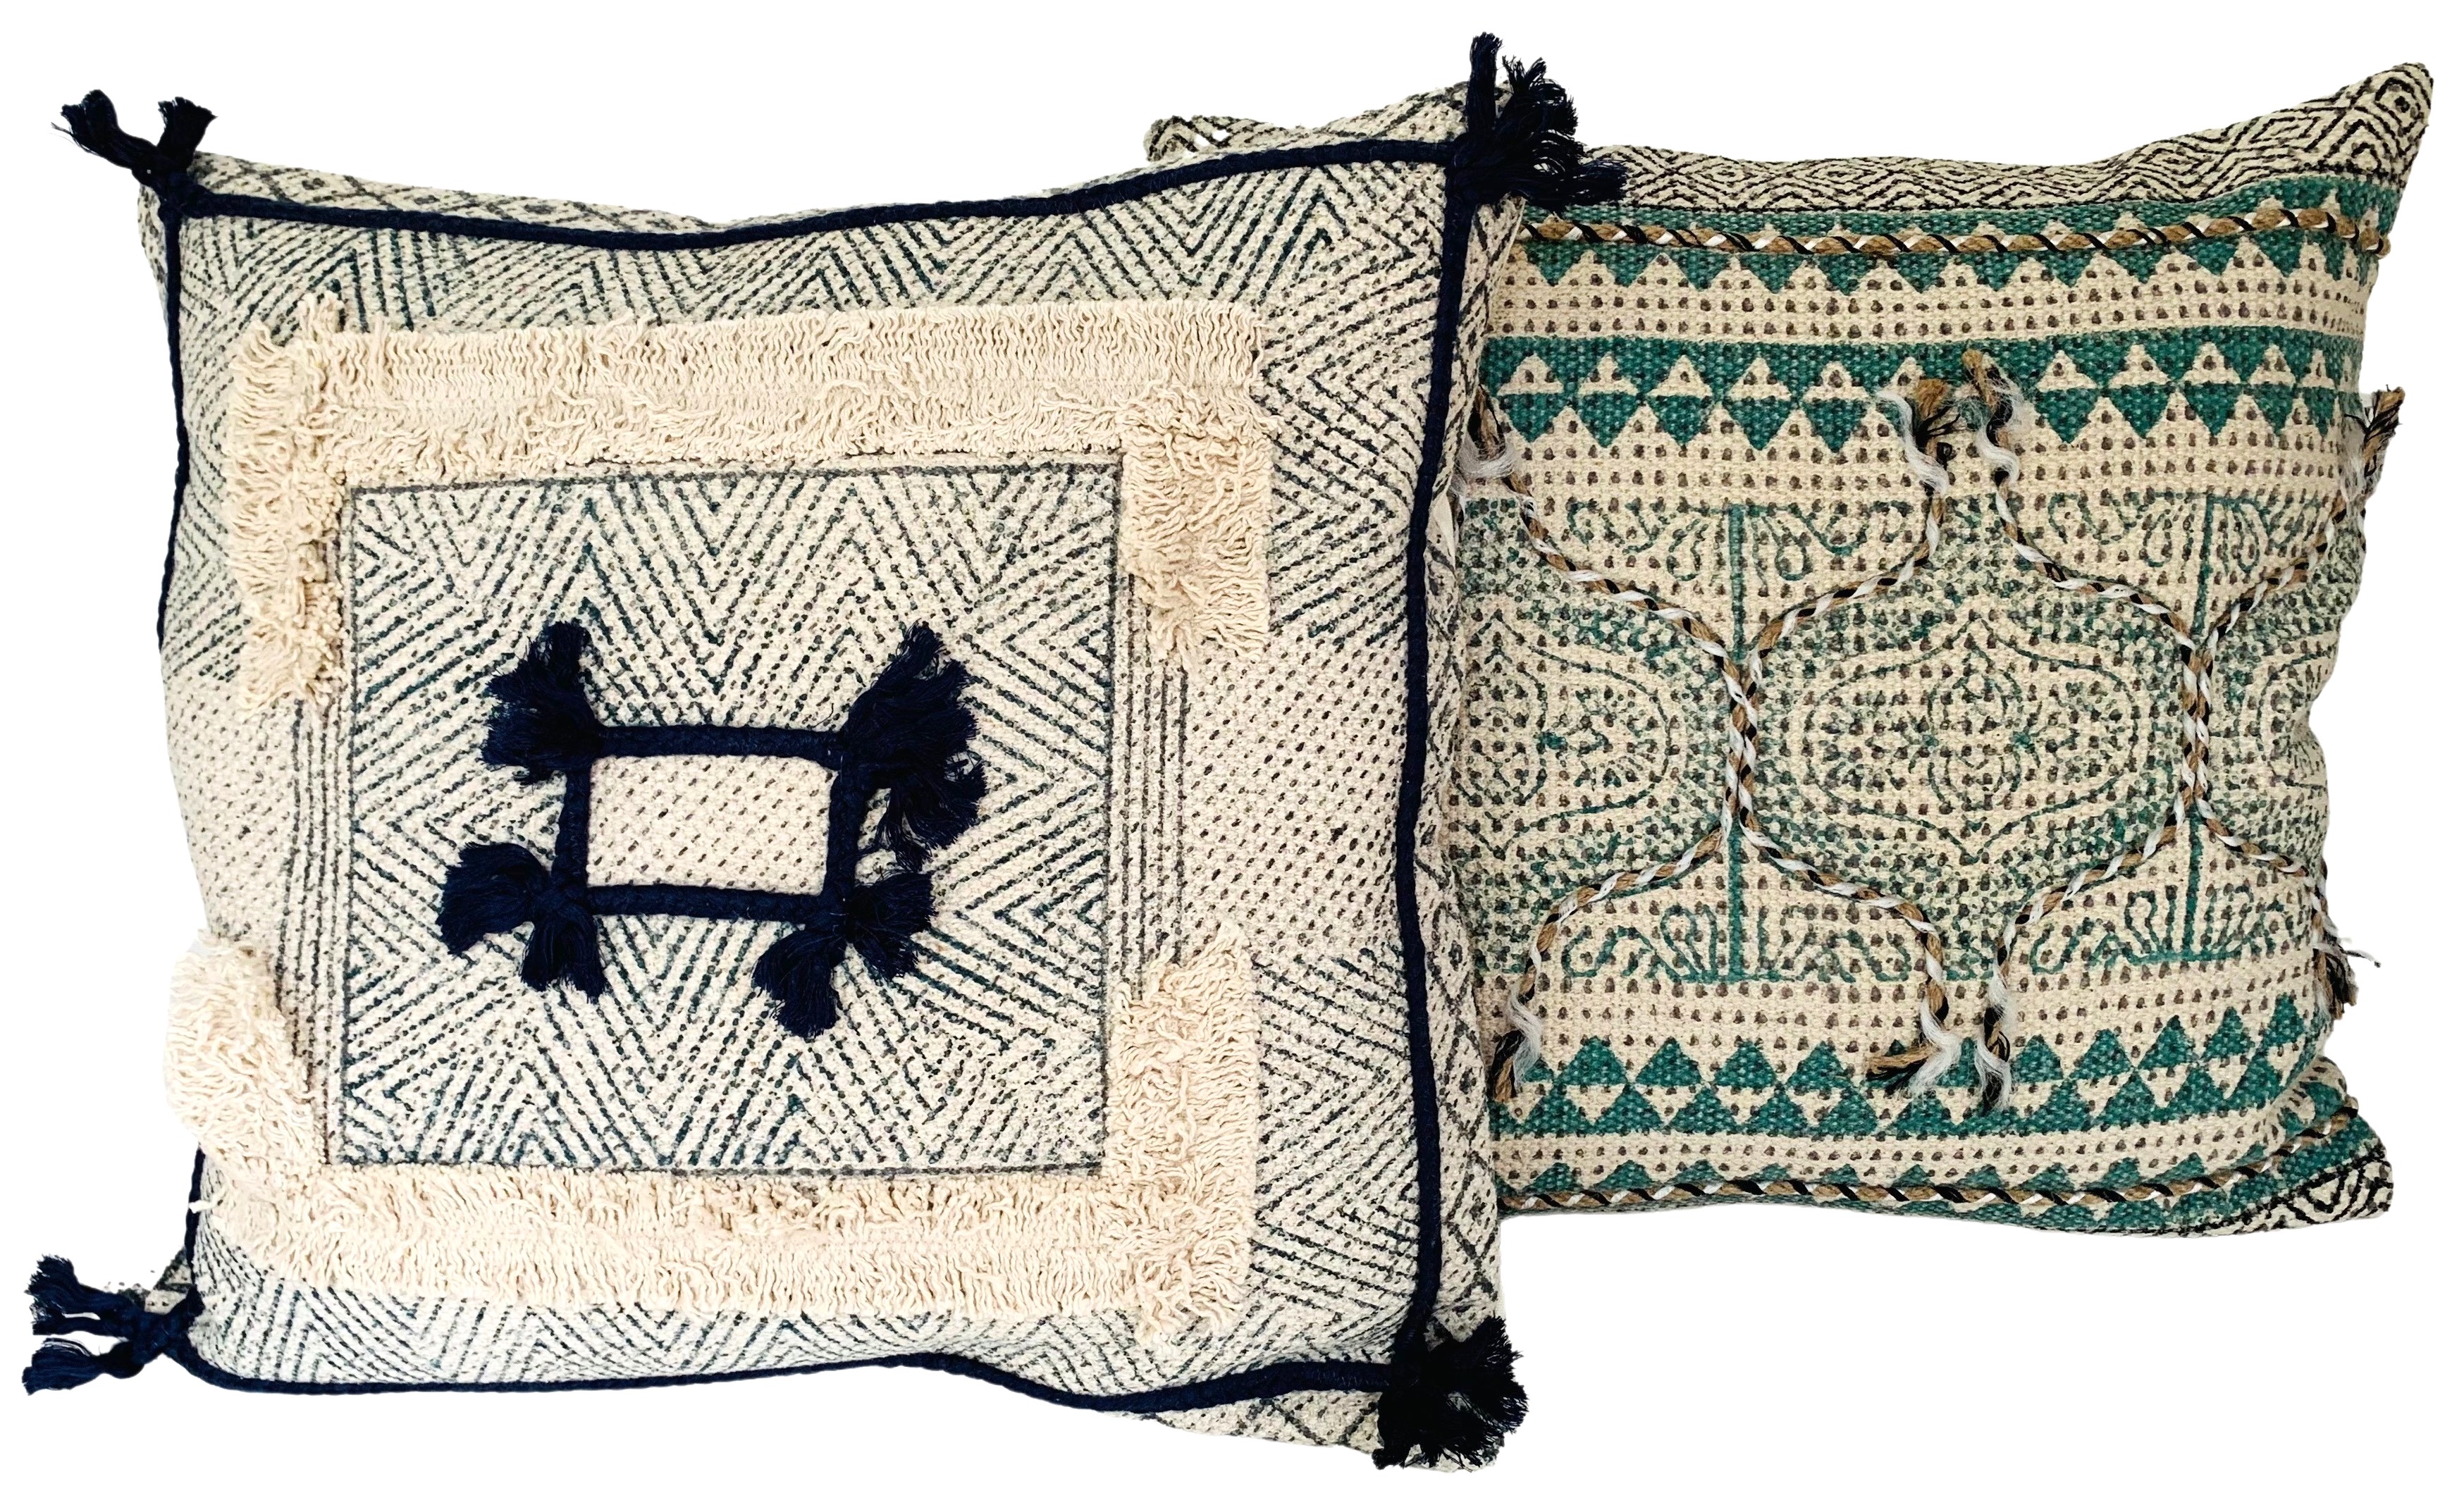 Indian Hand-Printed Pillows, Pair